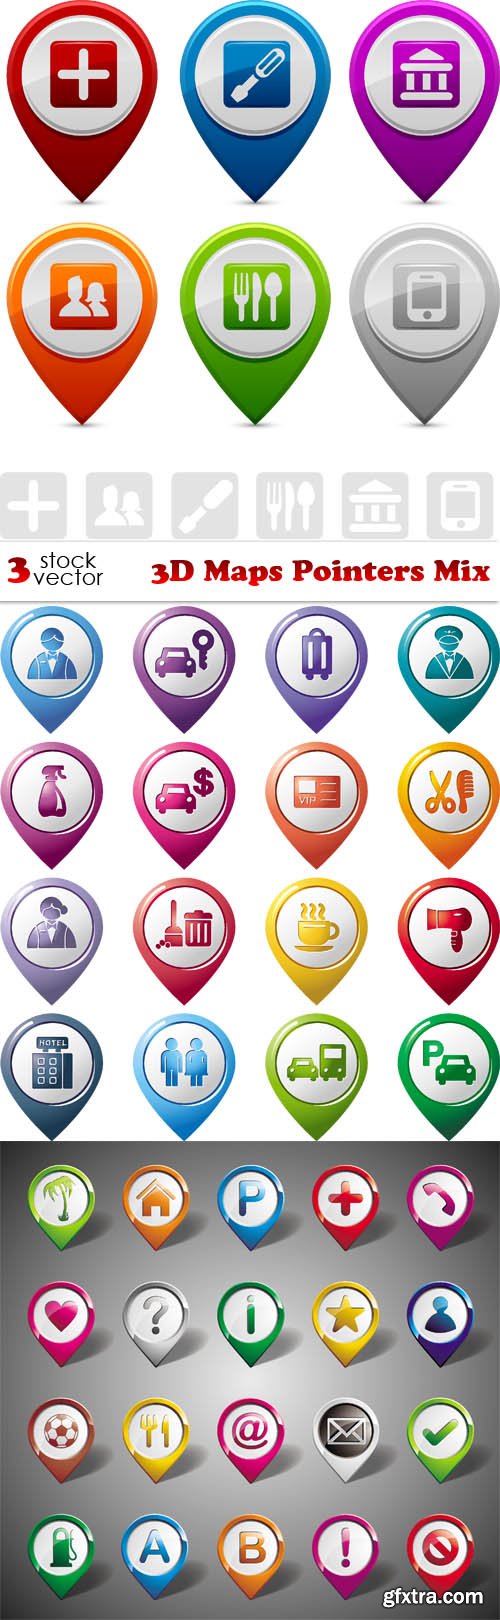 Vectors - 3D Maps Pointers Mix